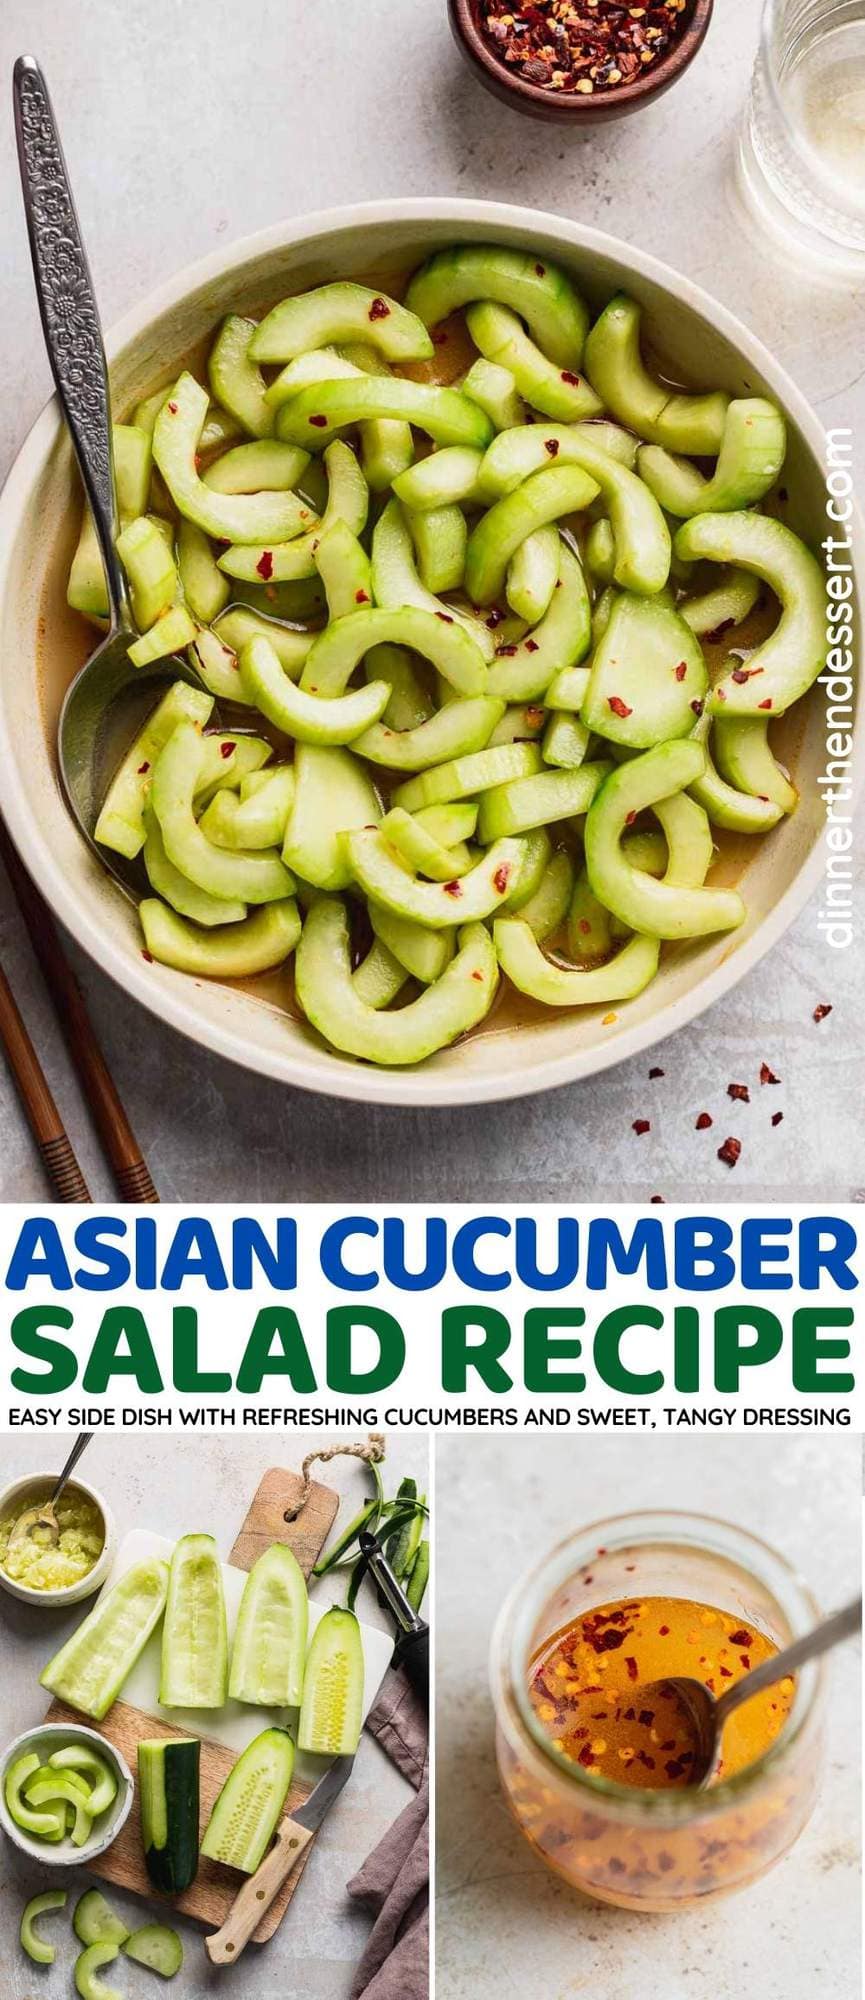 Asian Cucumber Salad collage